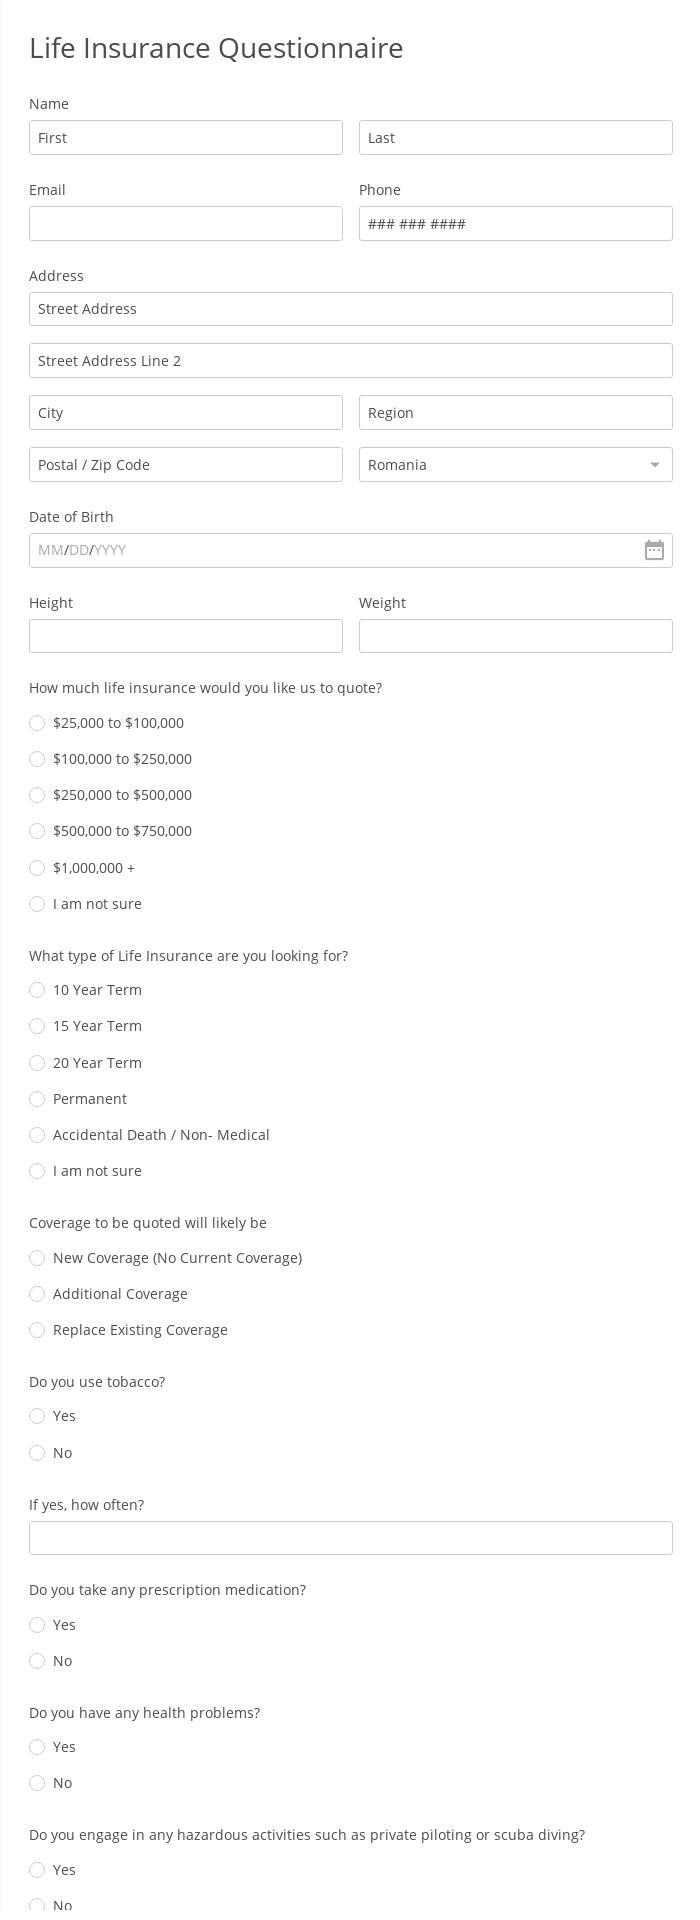 Life Insurance Questionnaire